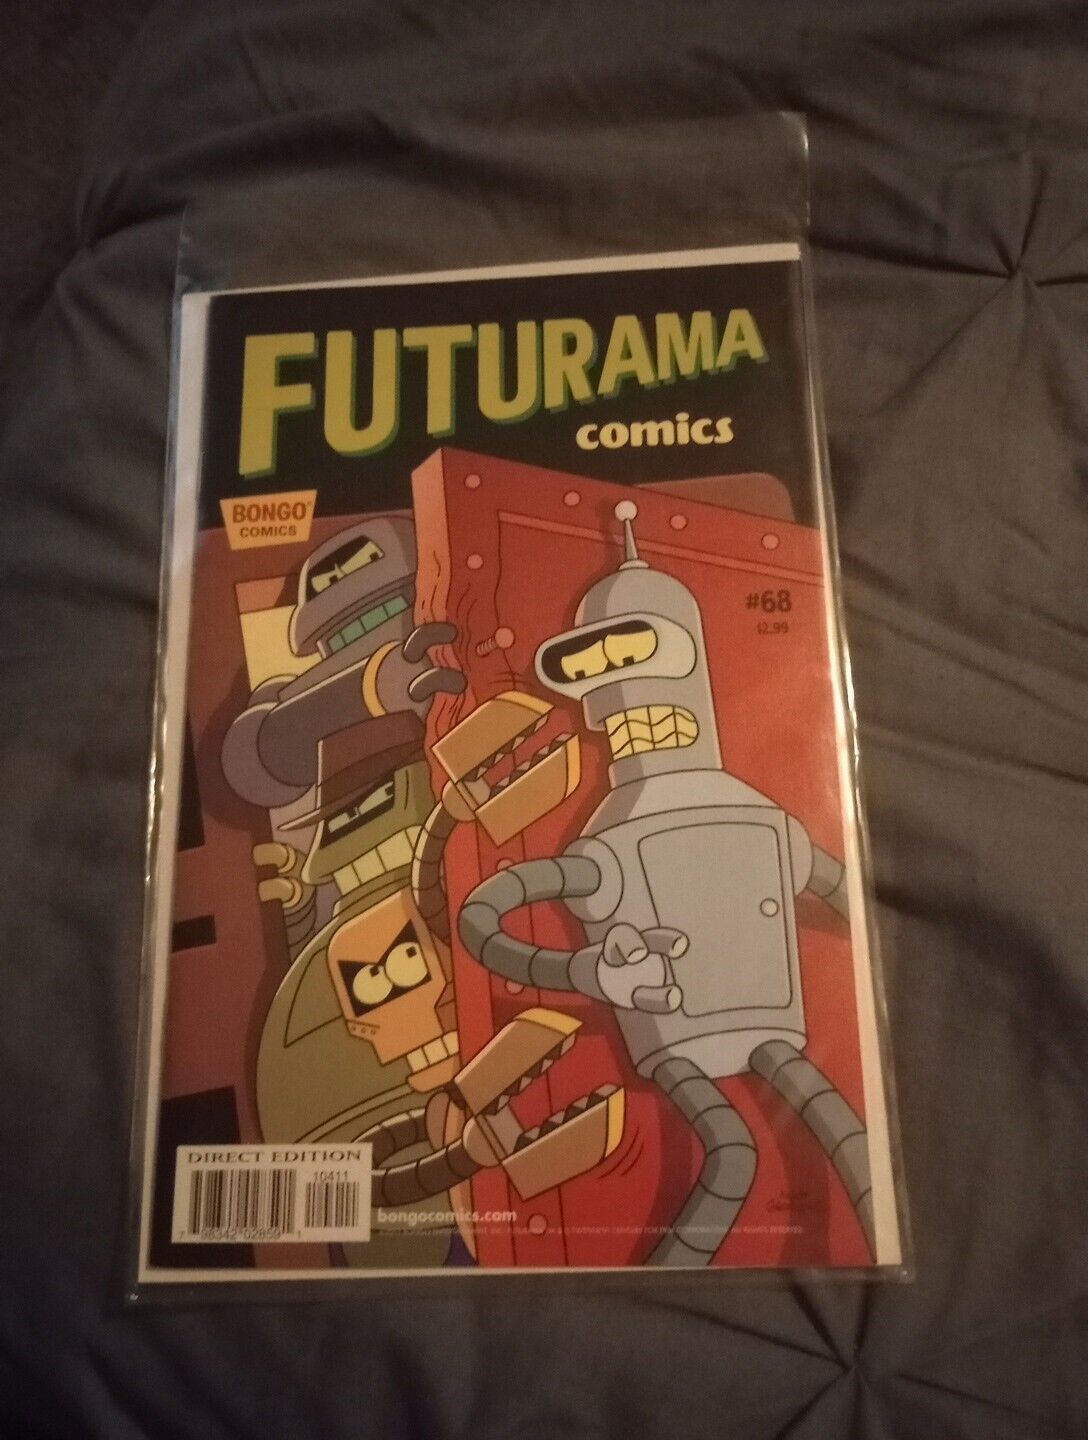 FUTURAMA COMICS #68 Bongo Comics 2013